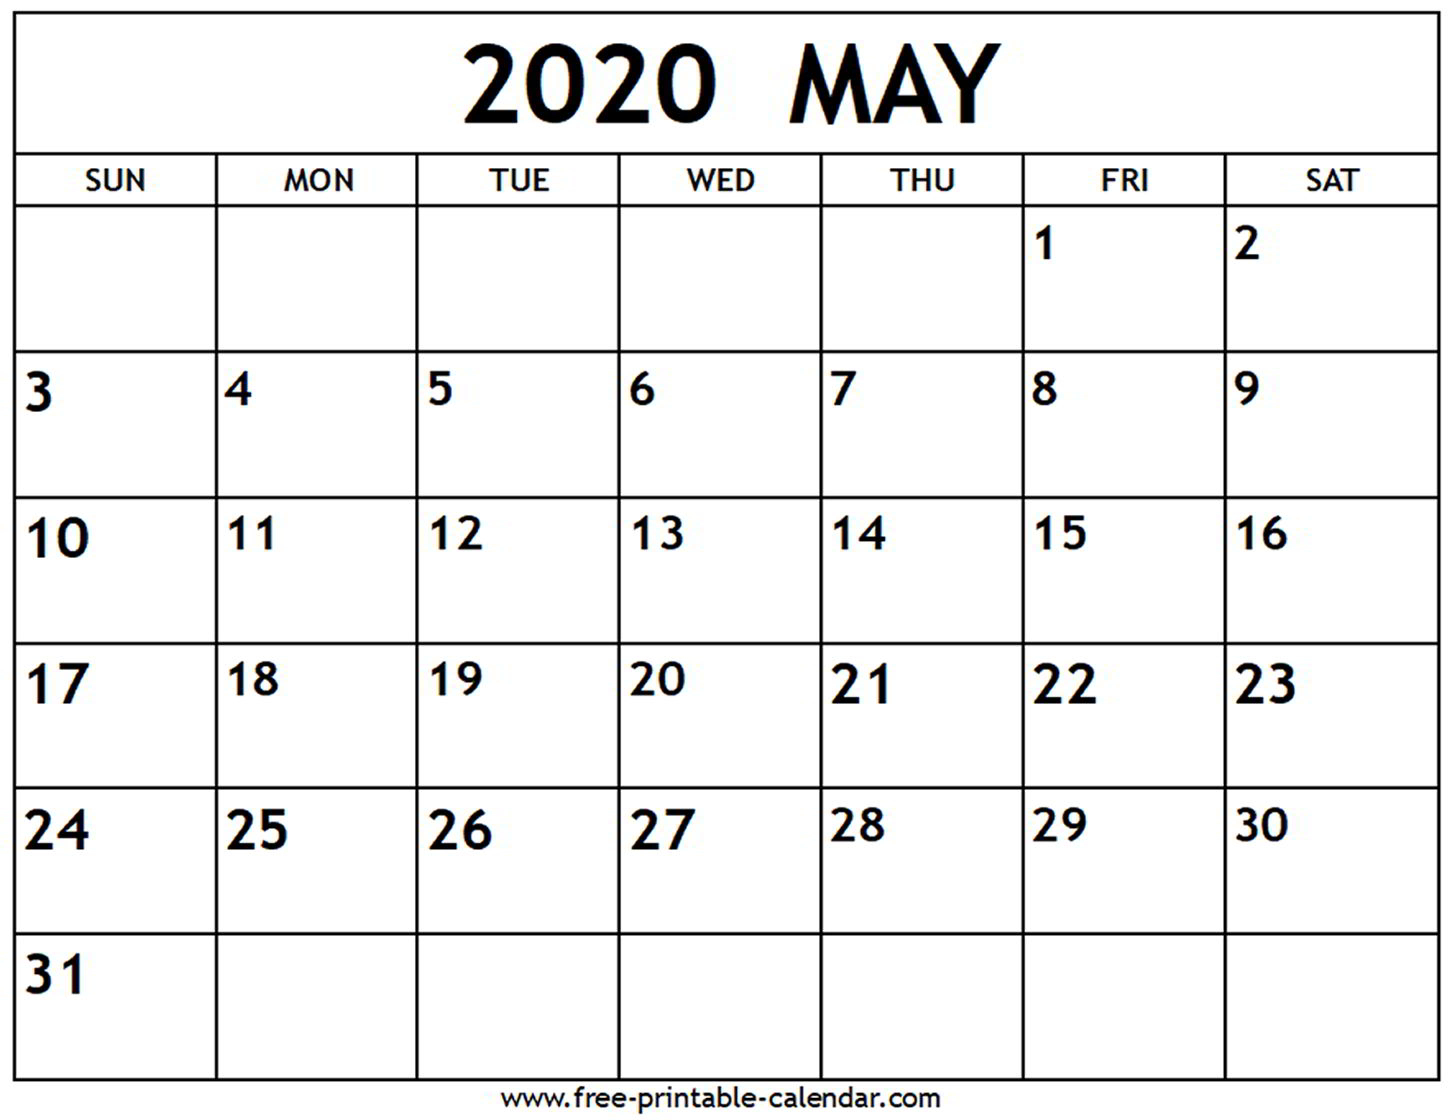 May 2020 Calendar - Free-Printable-Calendar